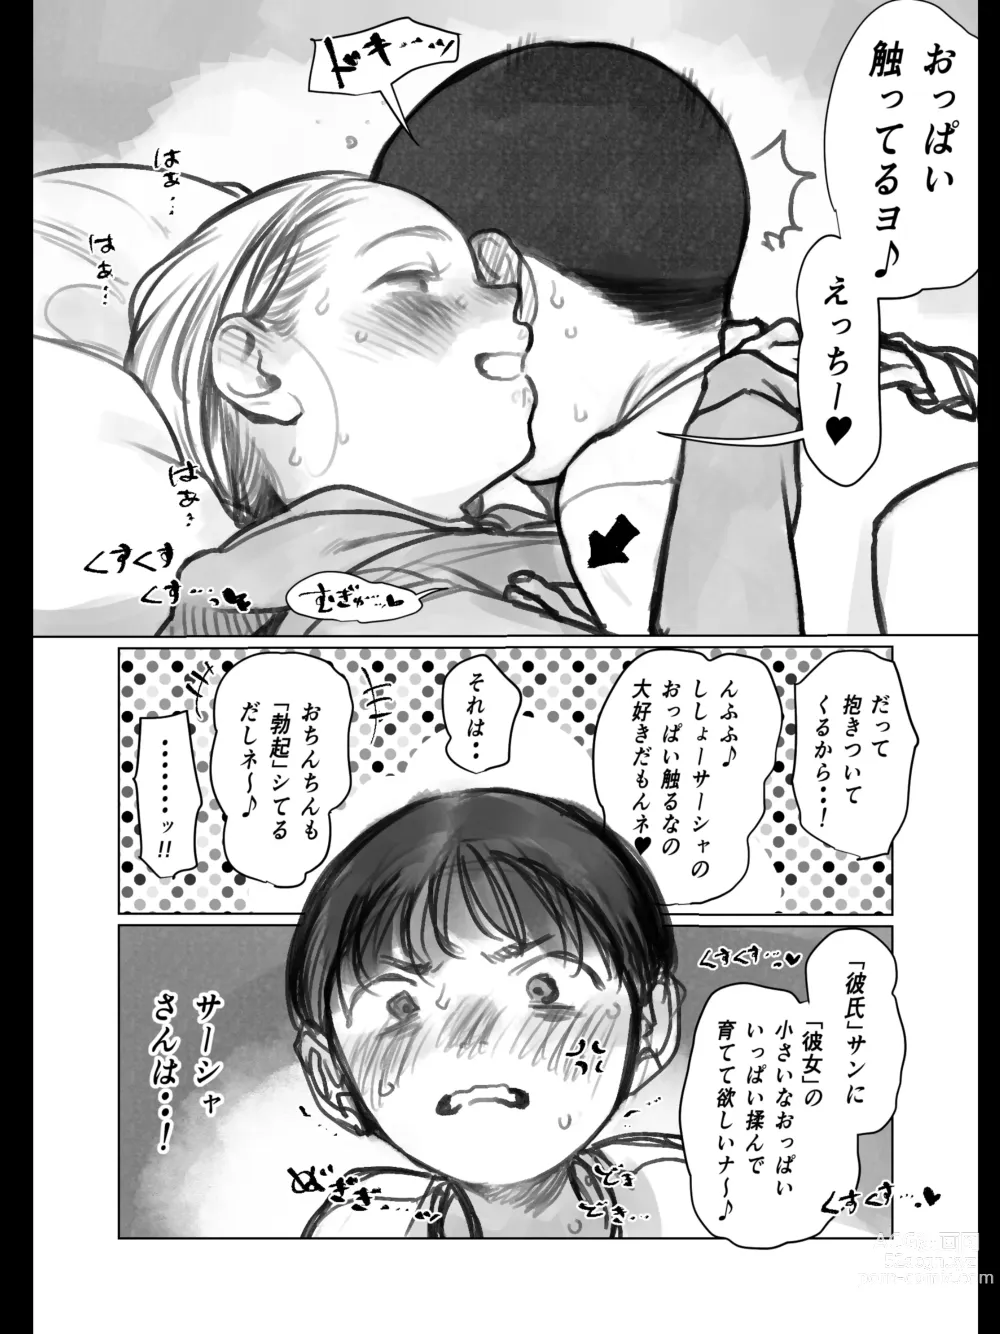 Page 6 of doujinshi Kuri Kyuuin Omocha to Sasha-chan.